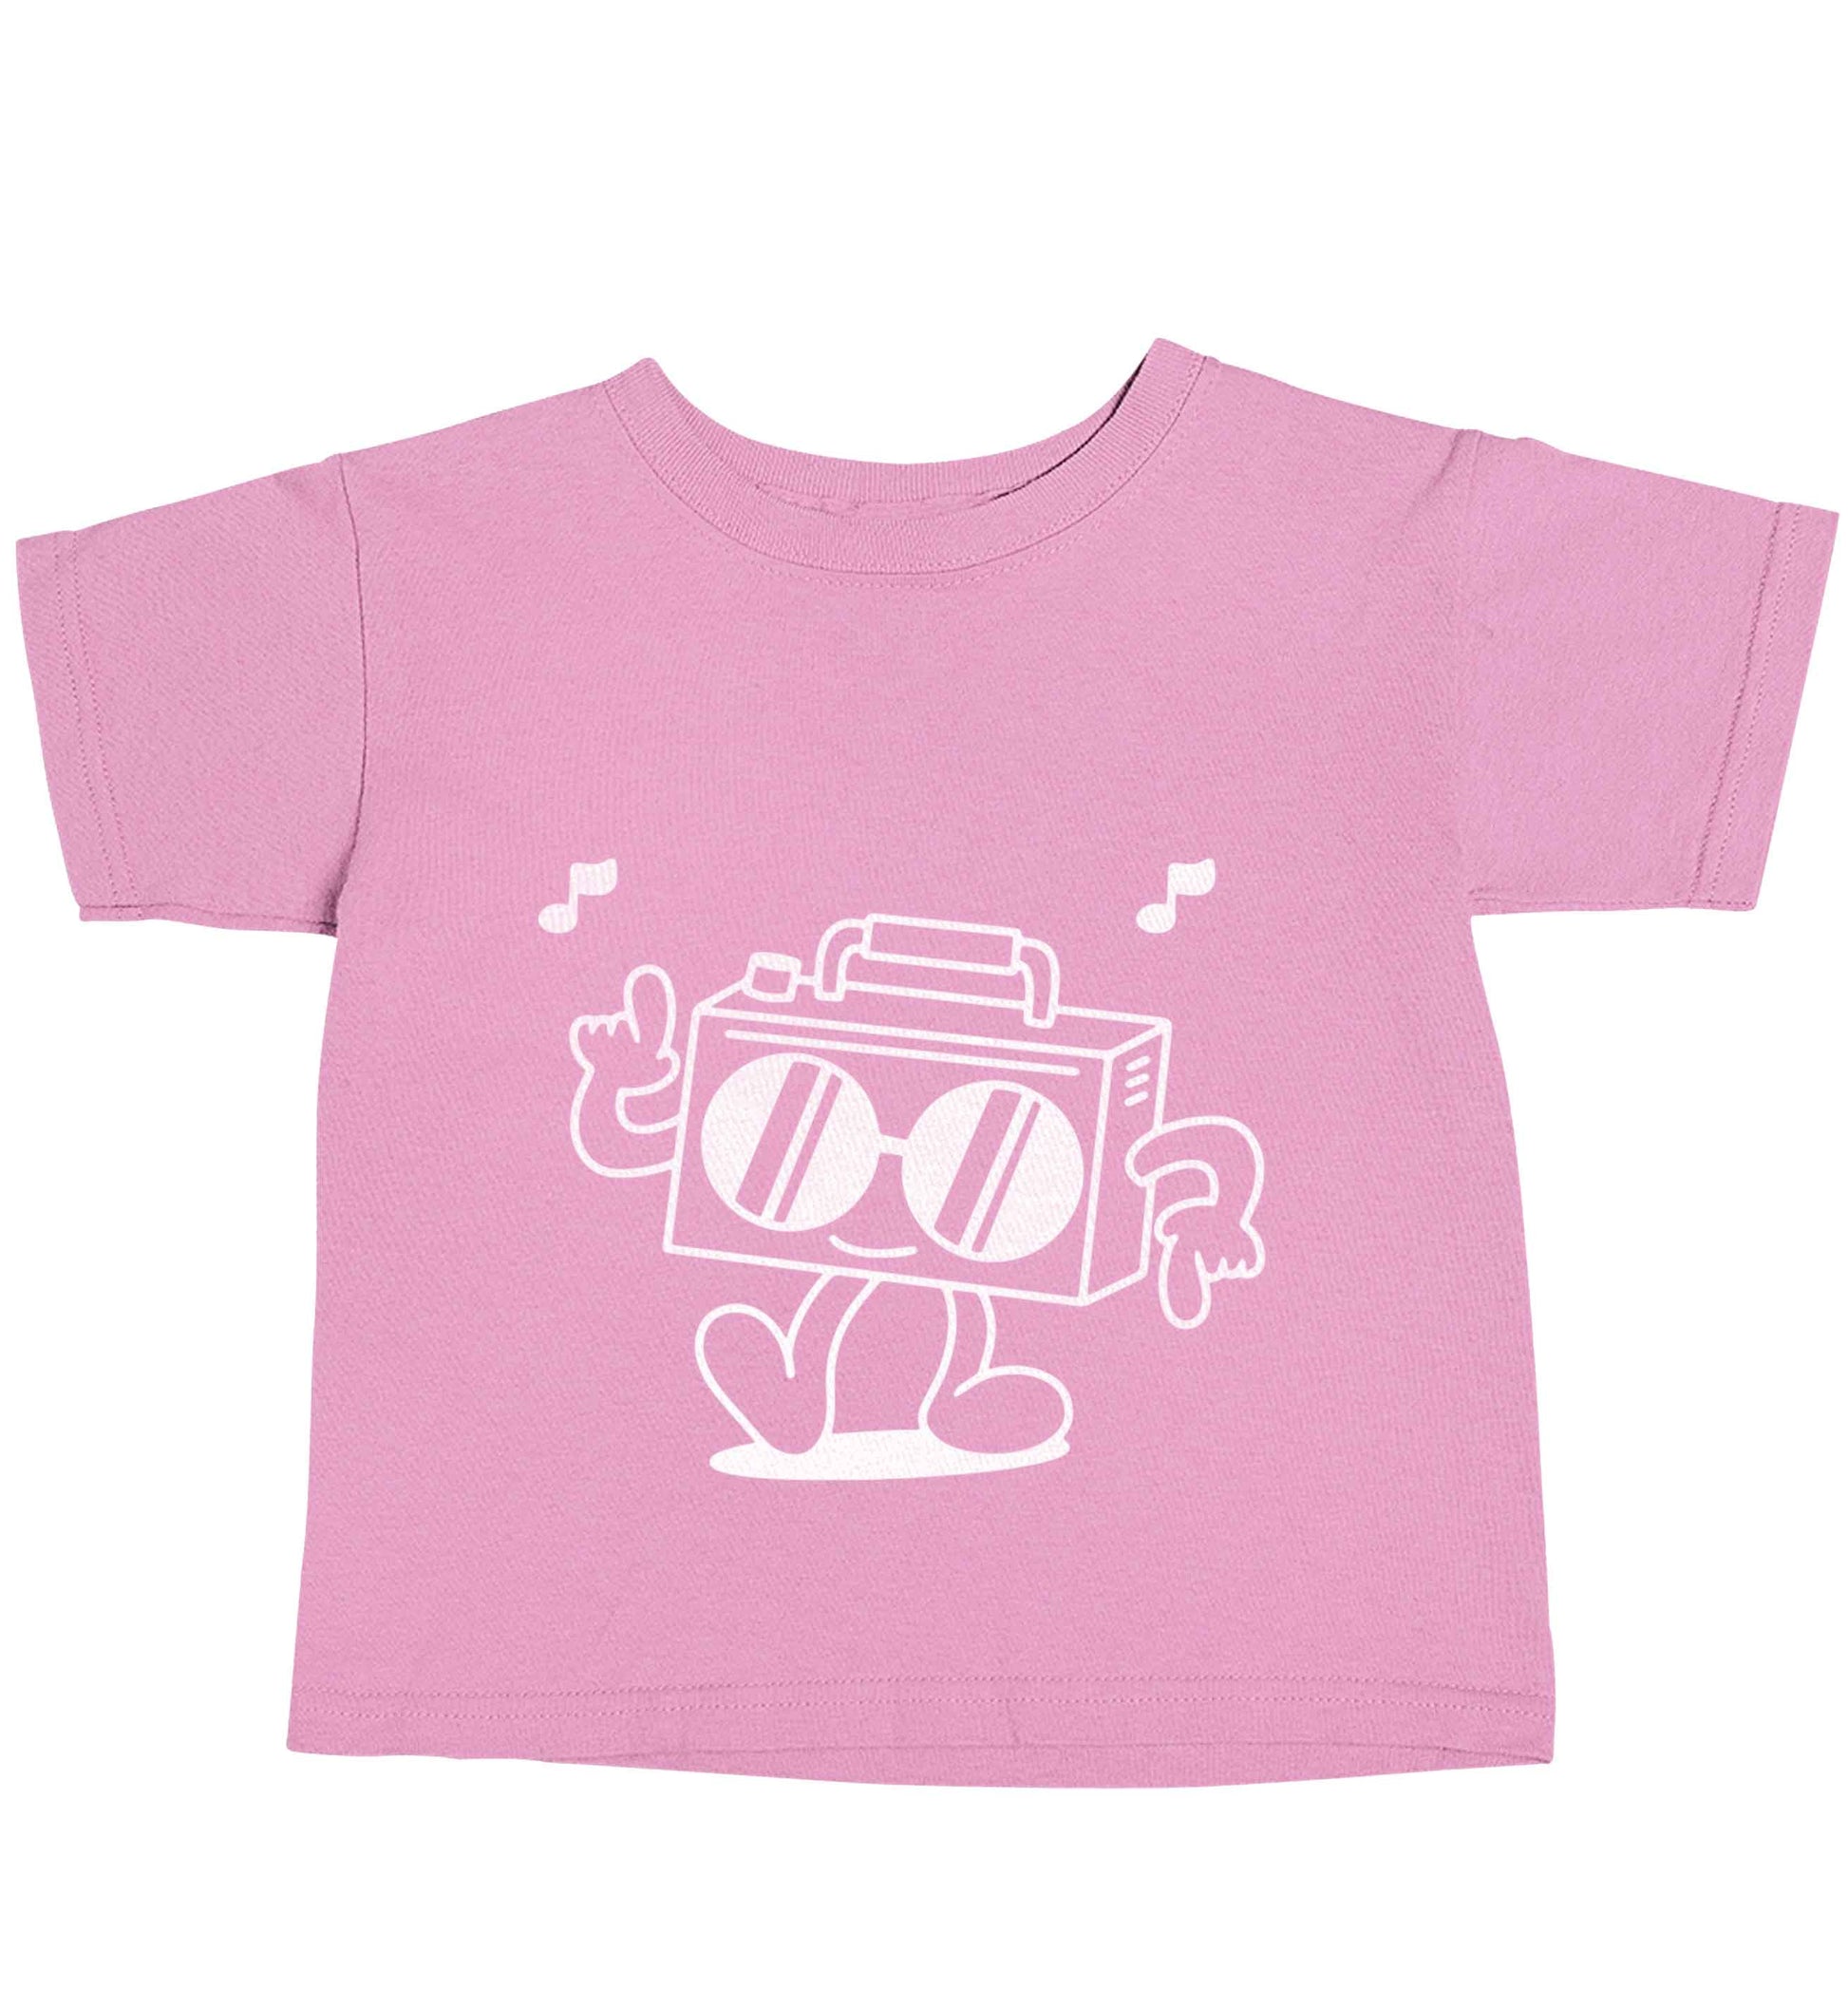 Boombox light pink baby toddler Tshirt 2 Years